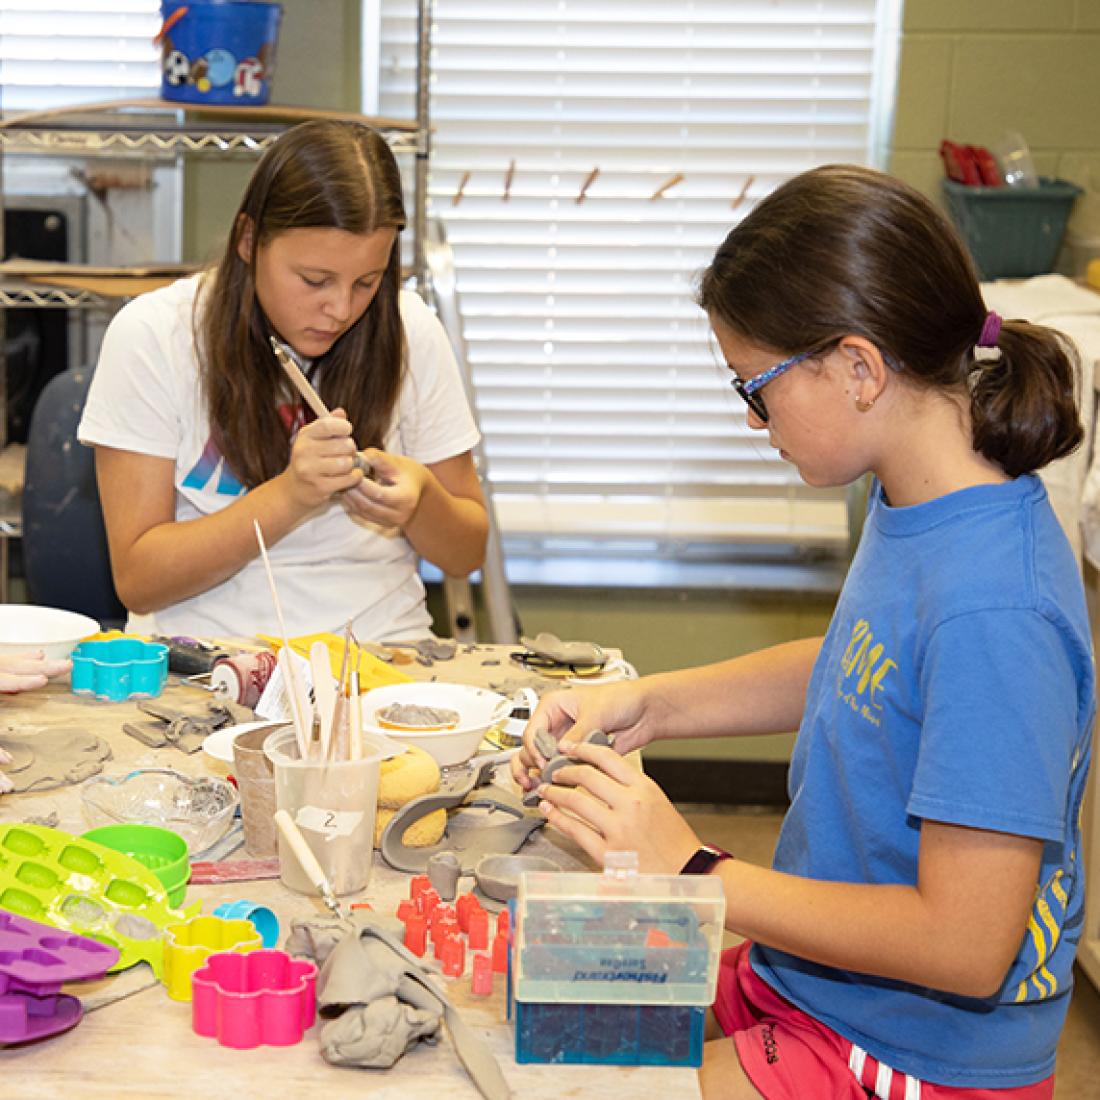 Three girls create crafts